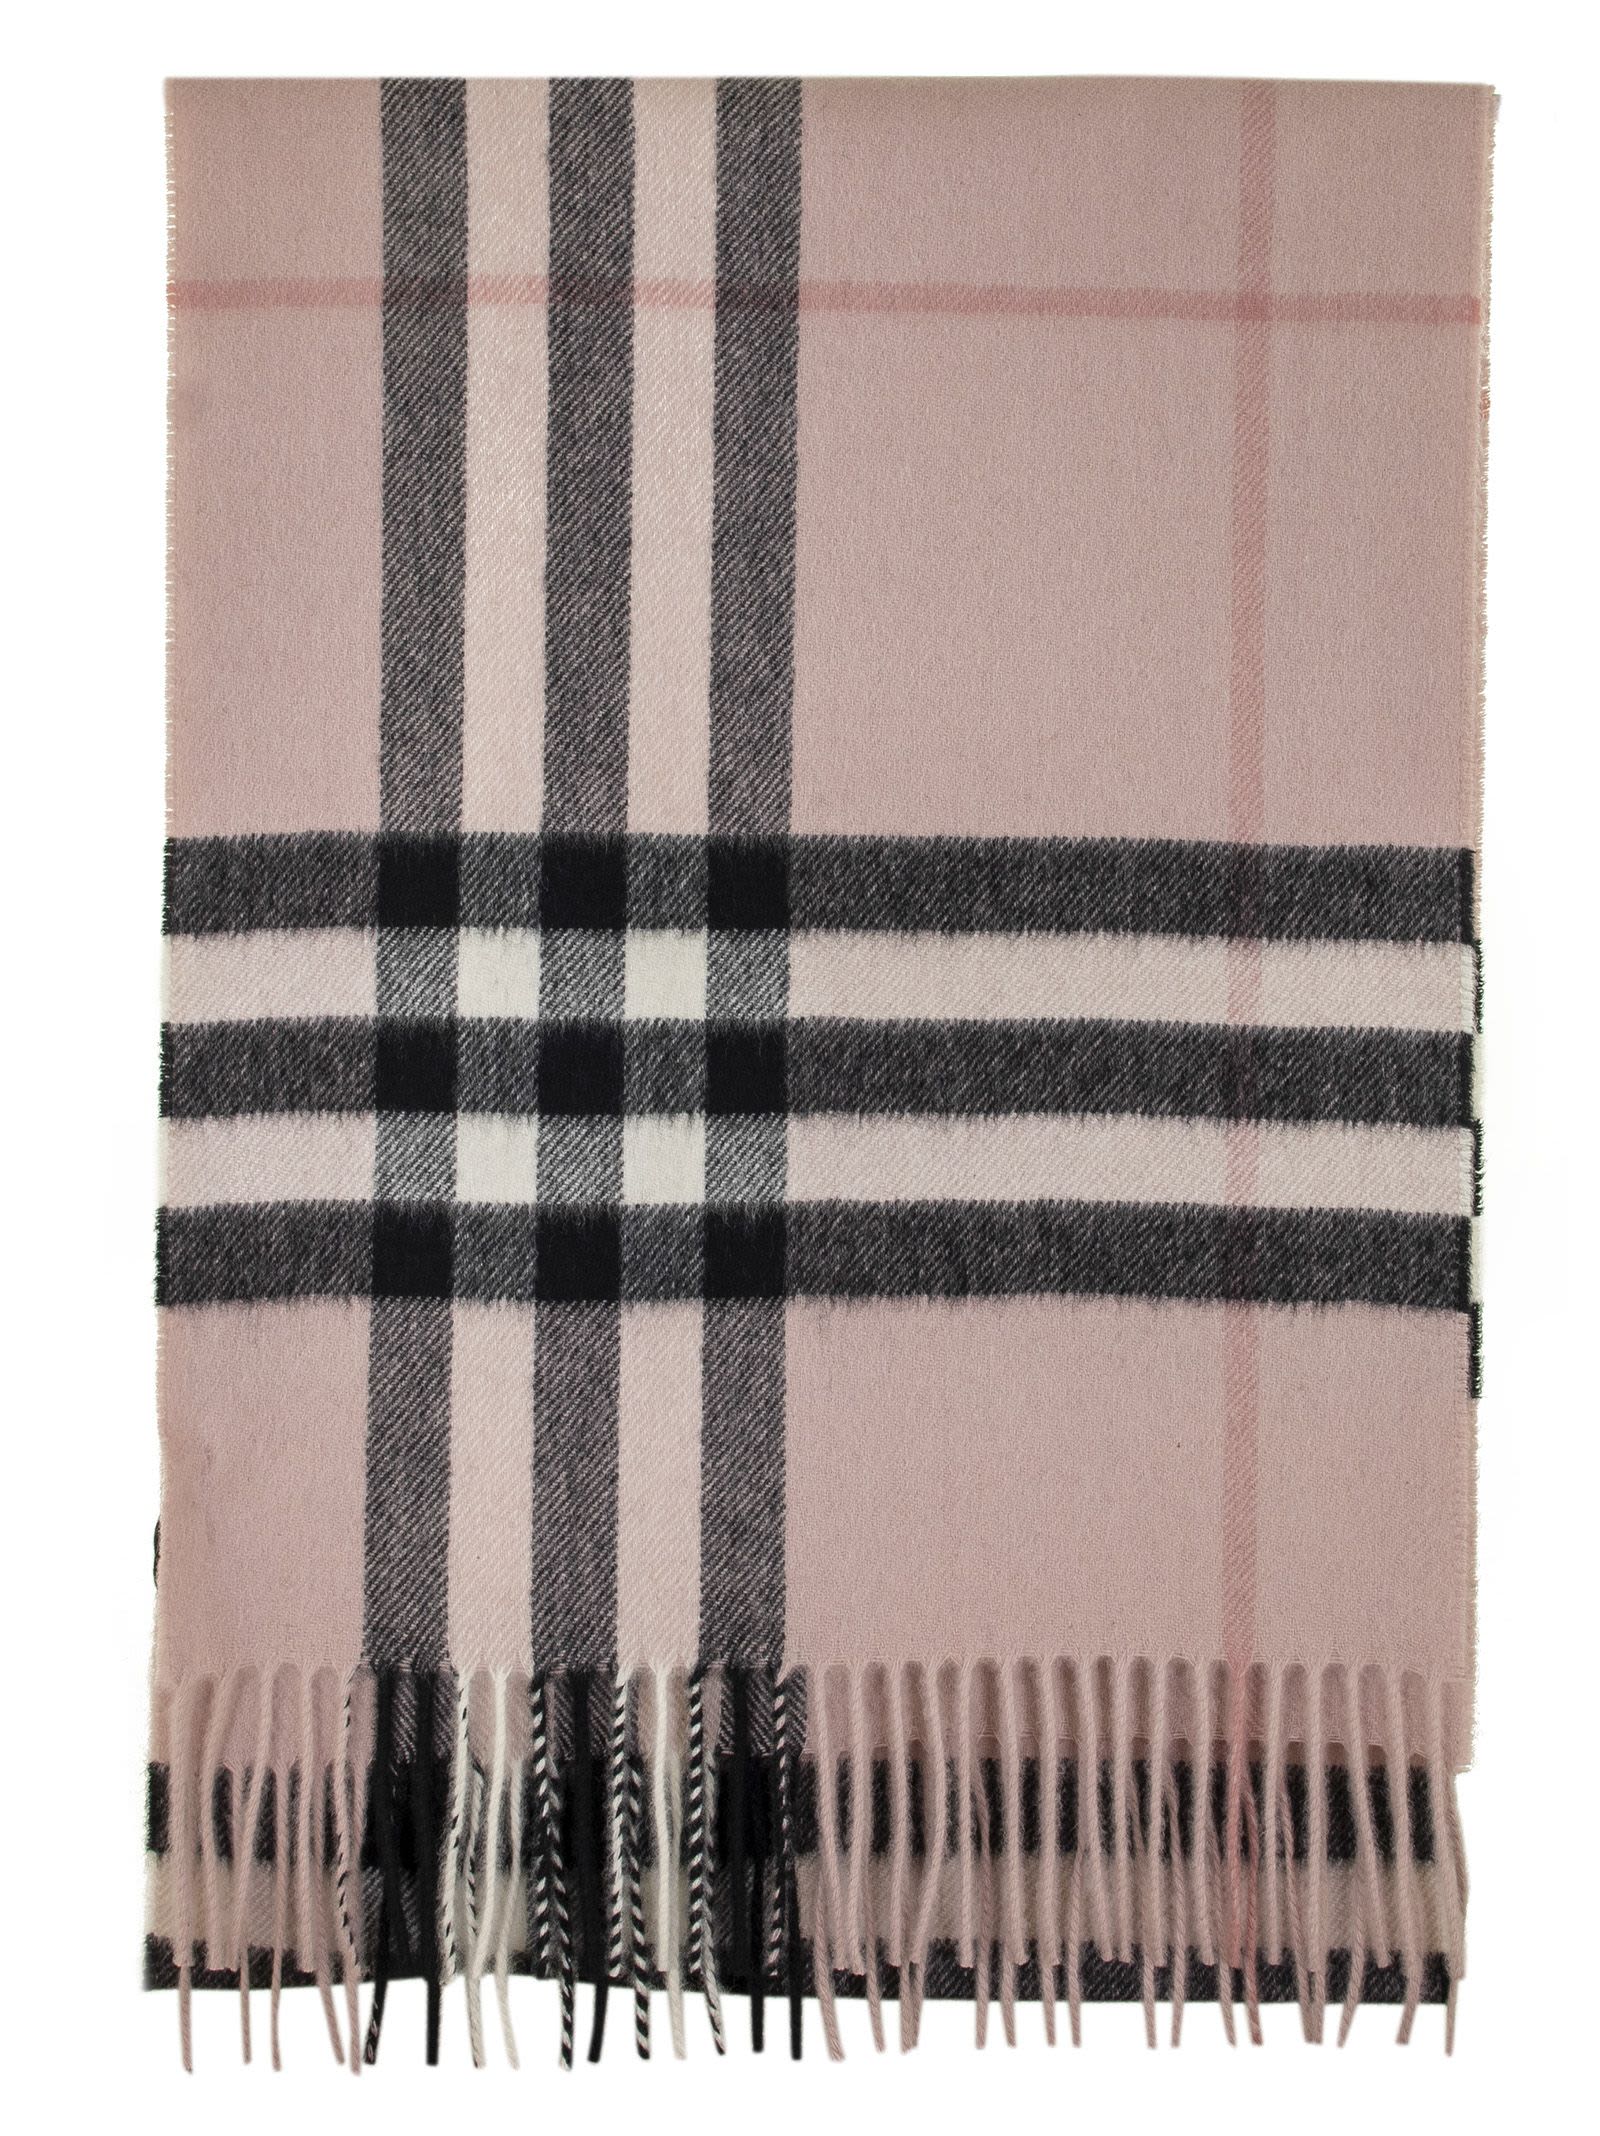 burberry cashmere scarf price